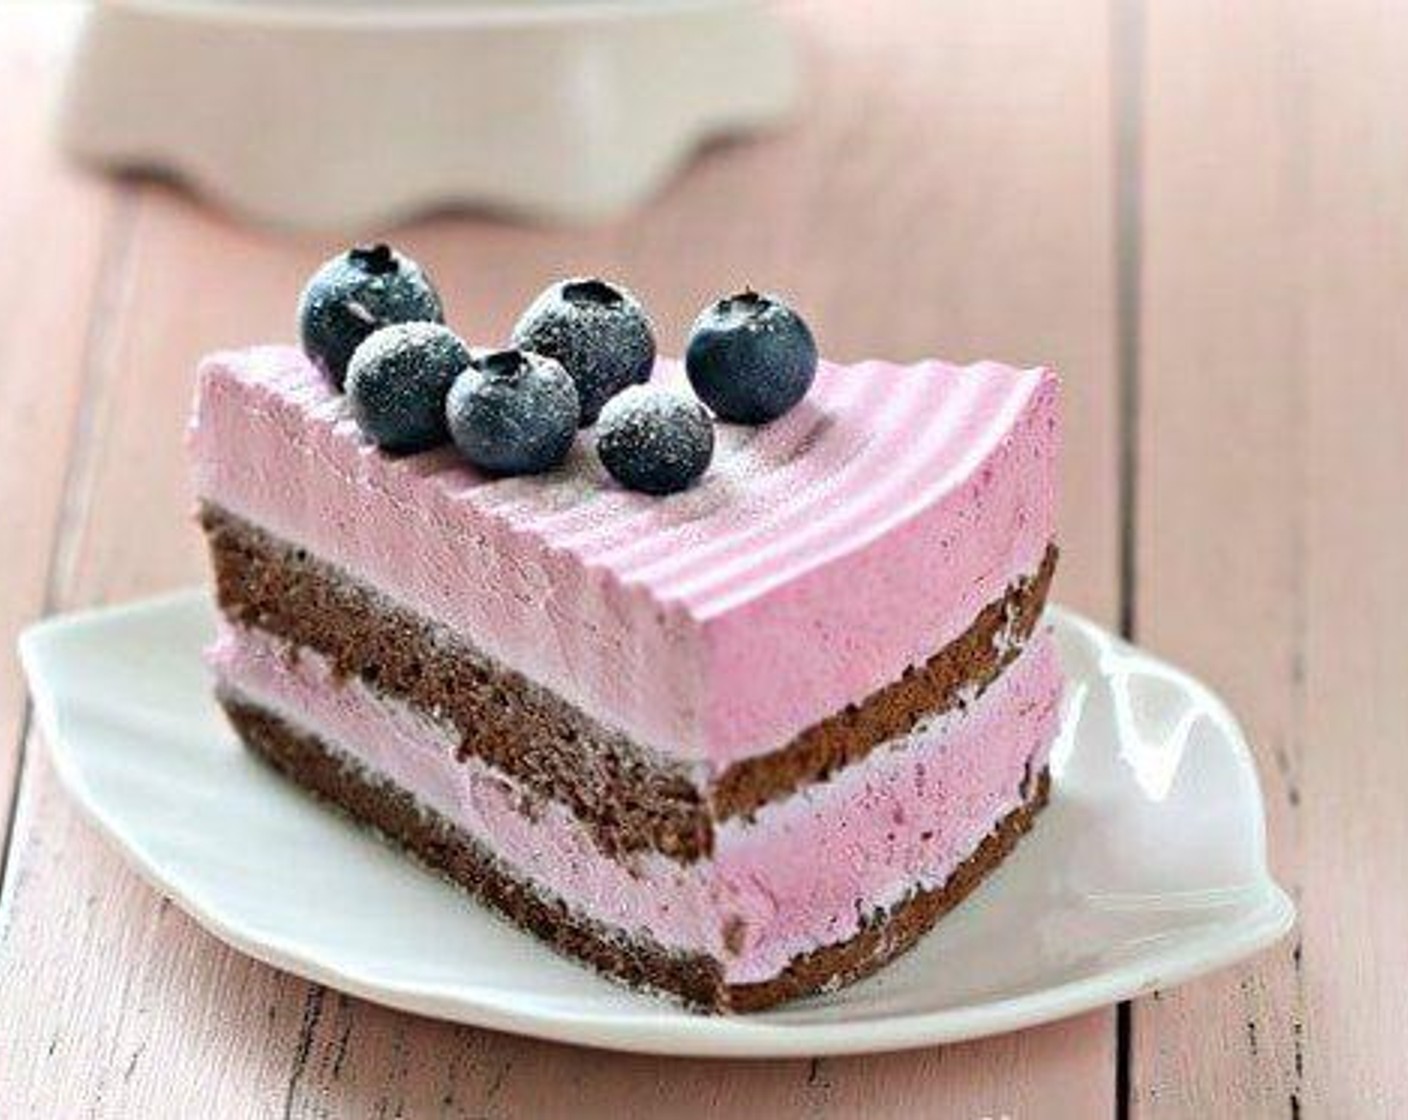 Blueberry Mousse Chocolate Cake